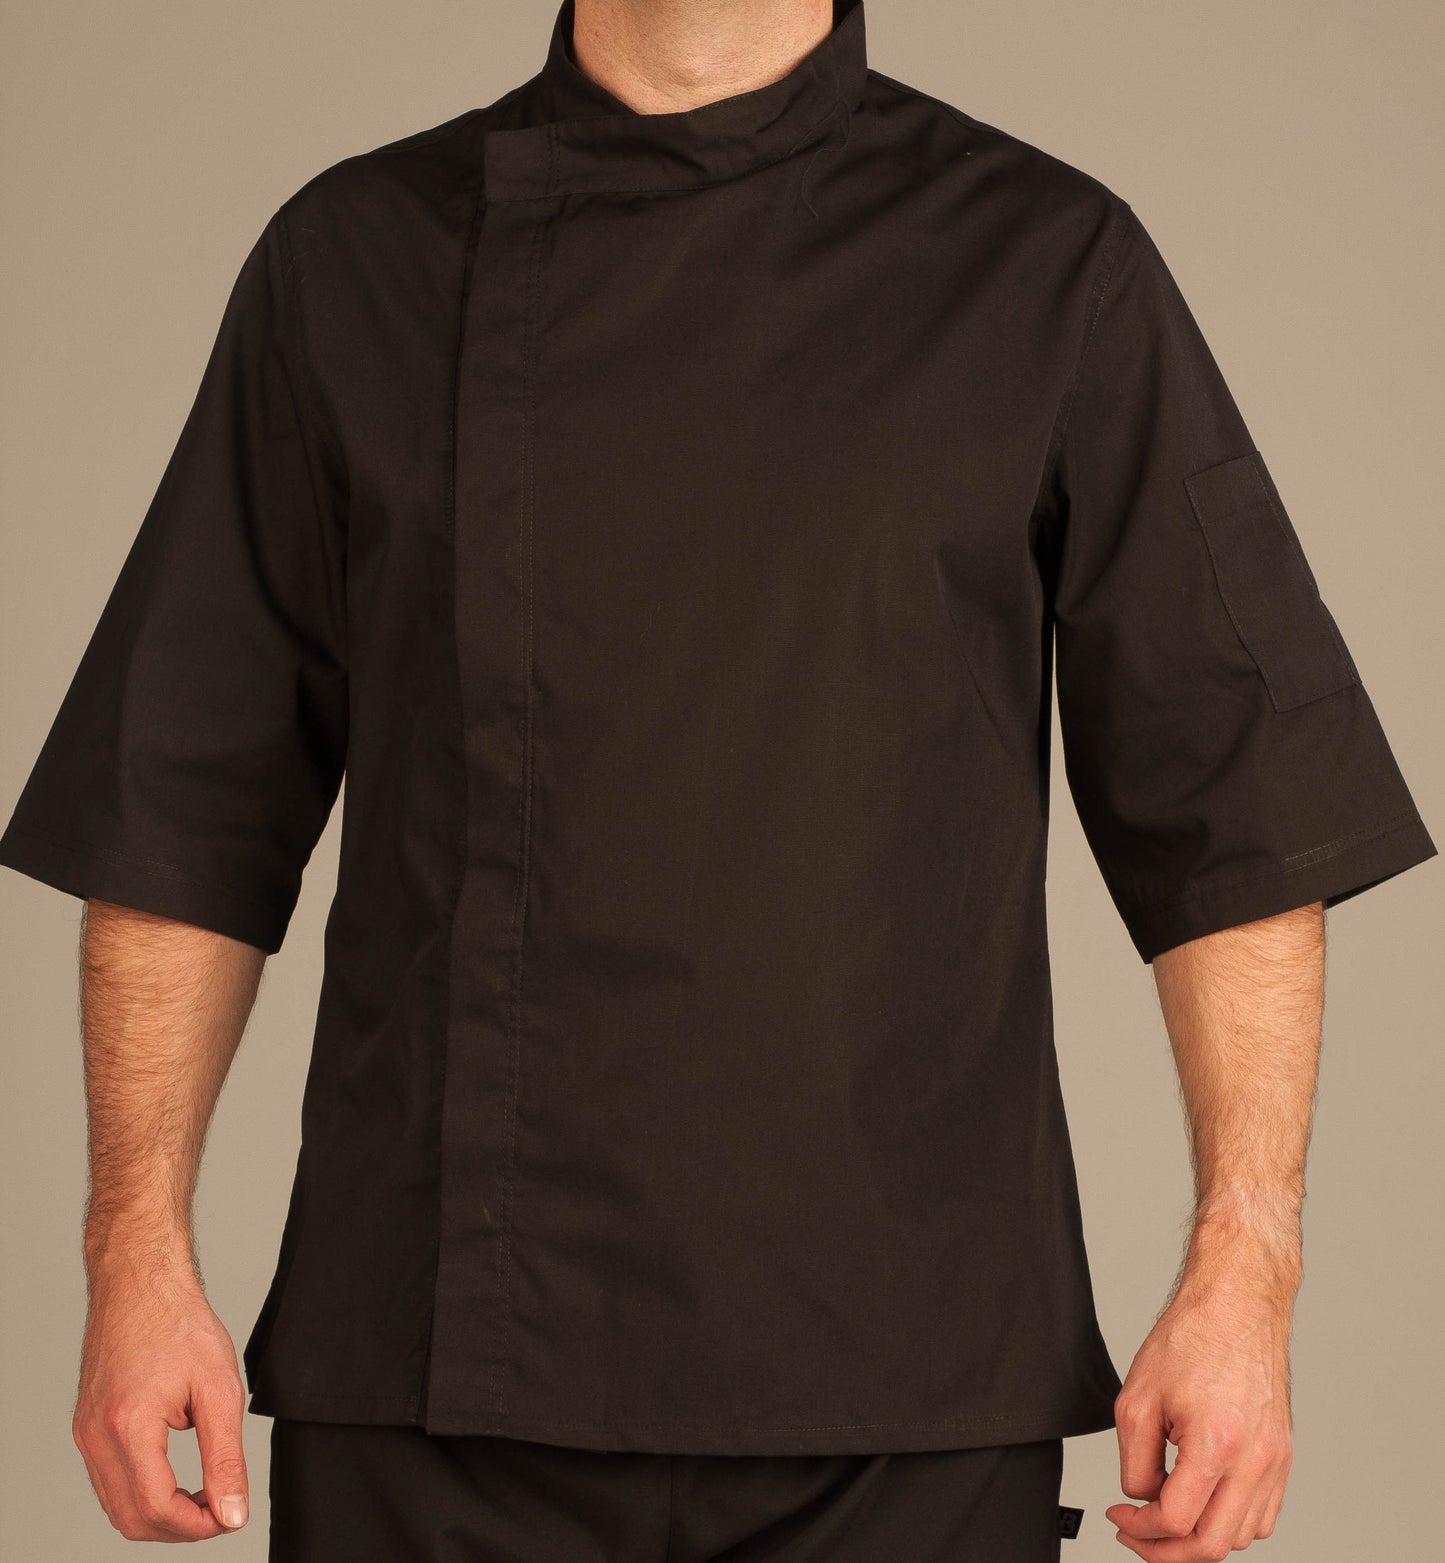 Joseph Chef Jacket Lightweight - Black or White